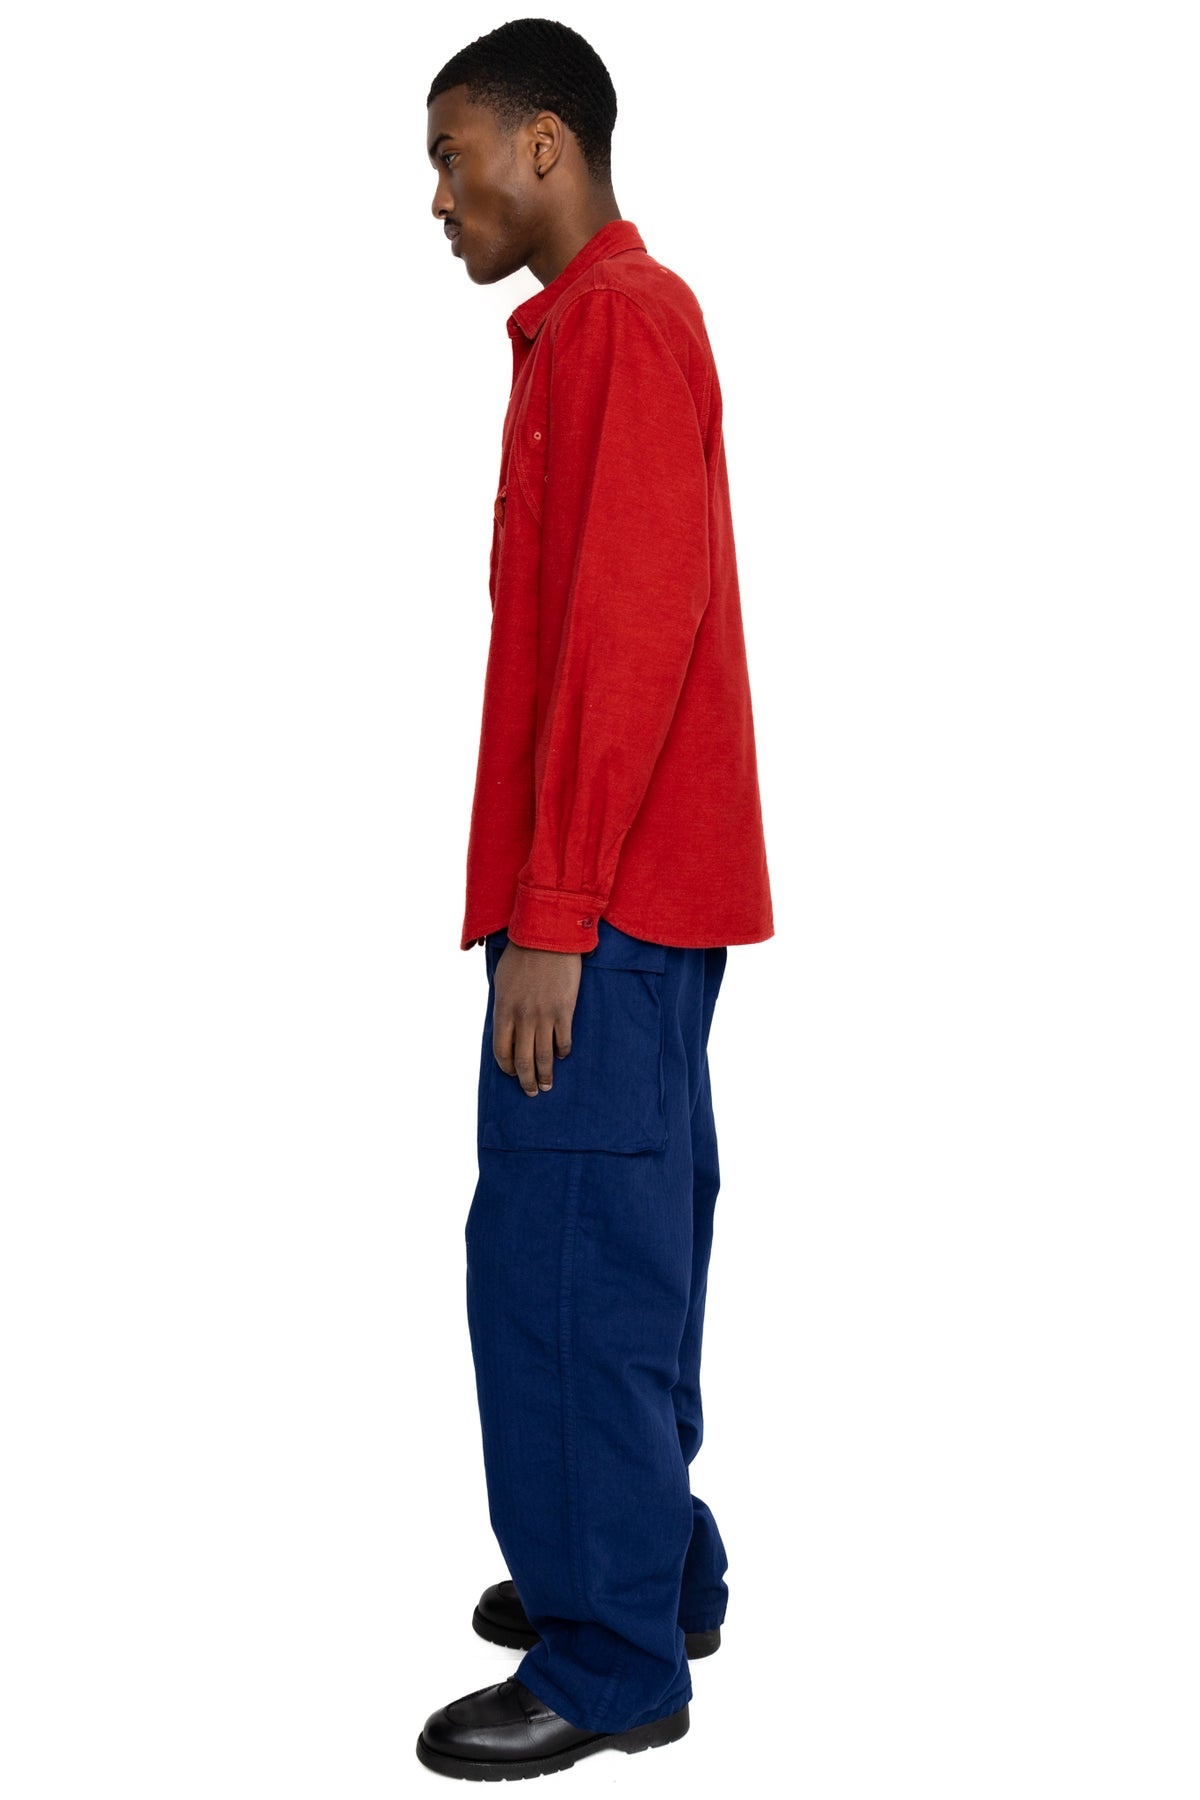 CPO Cotton Wool MOPAR Shirt - Red - 4